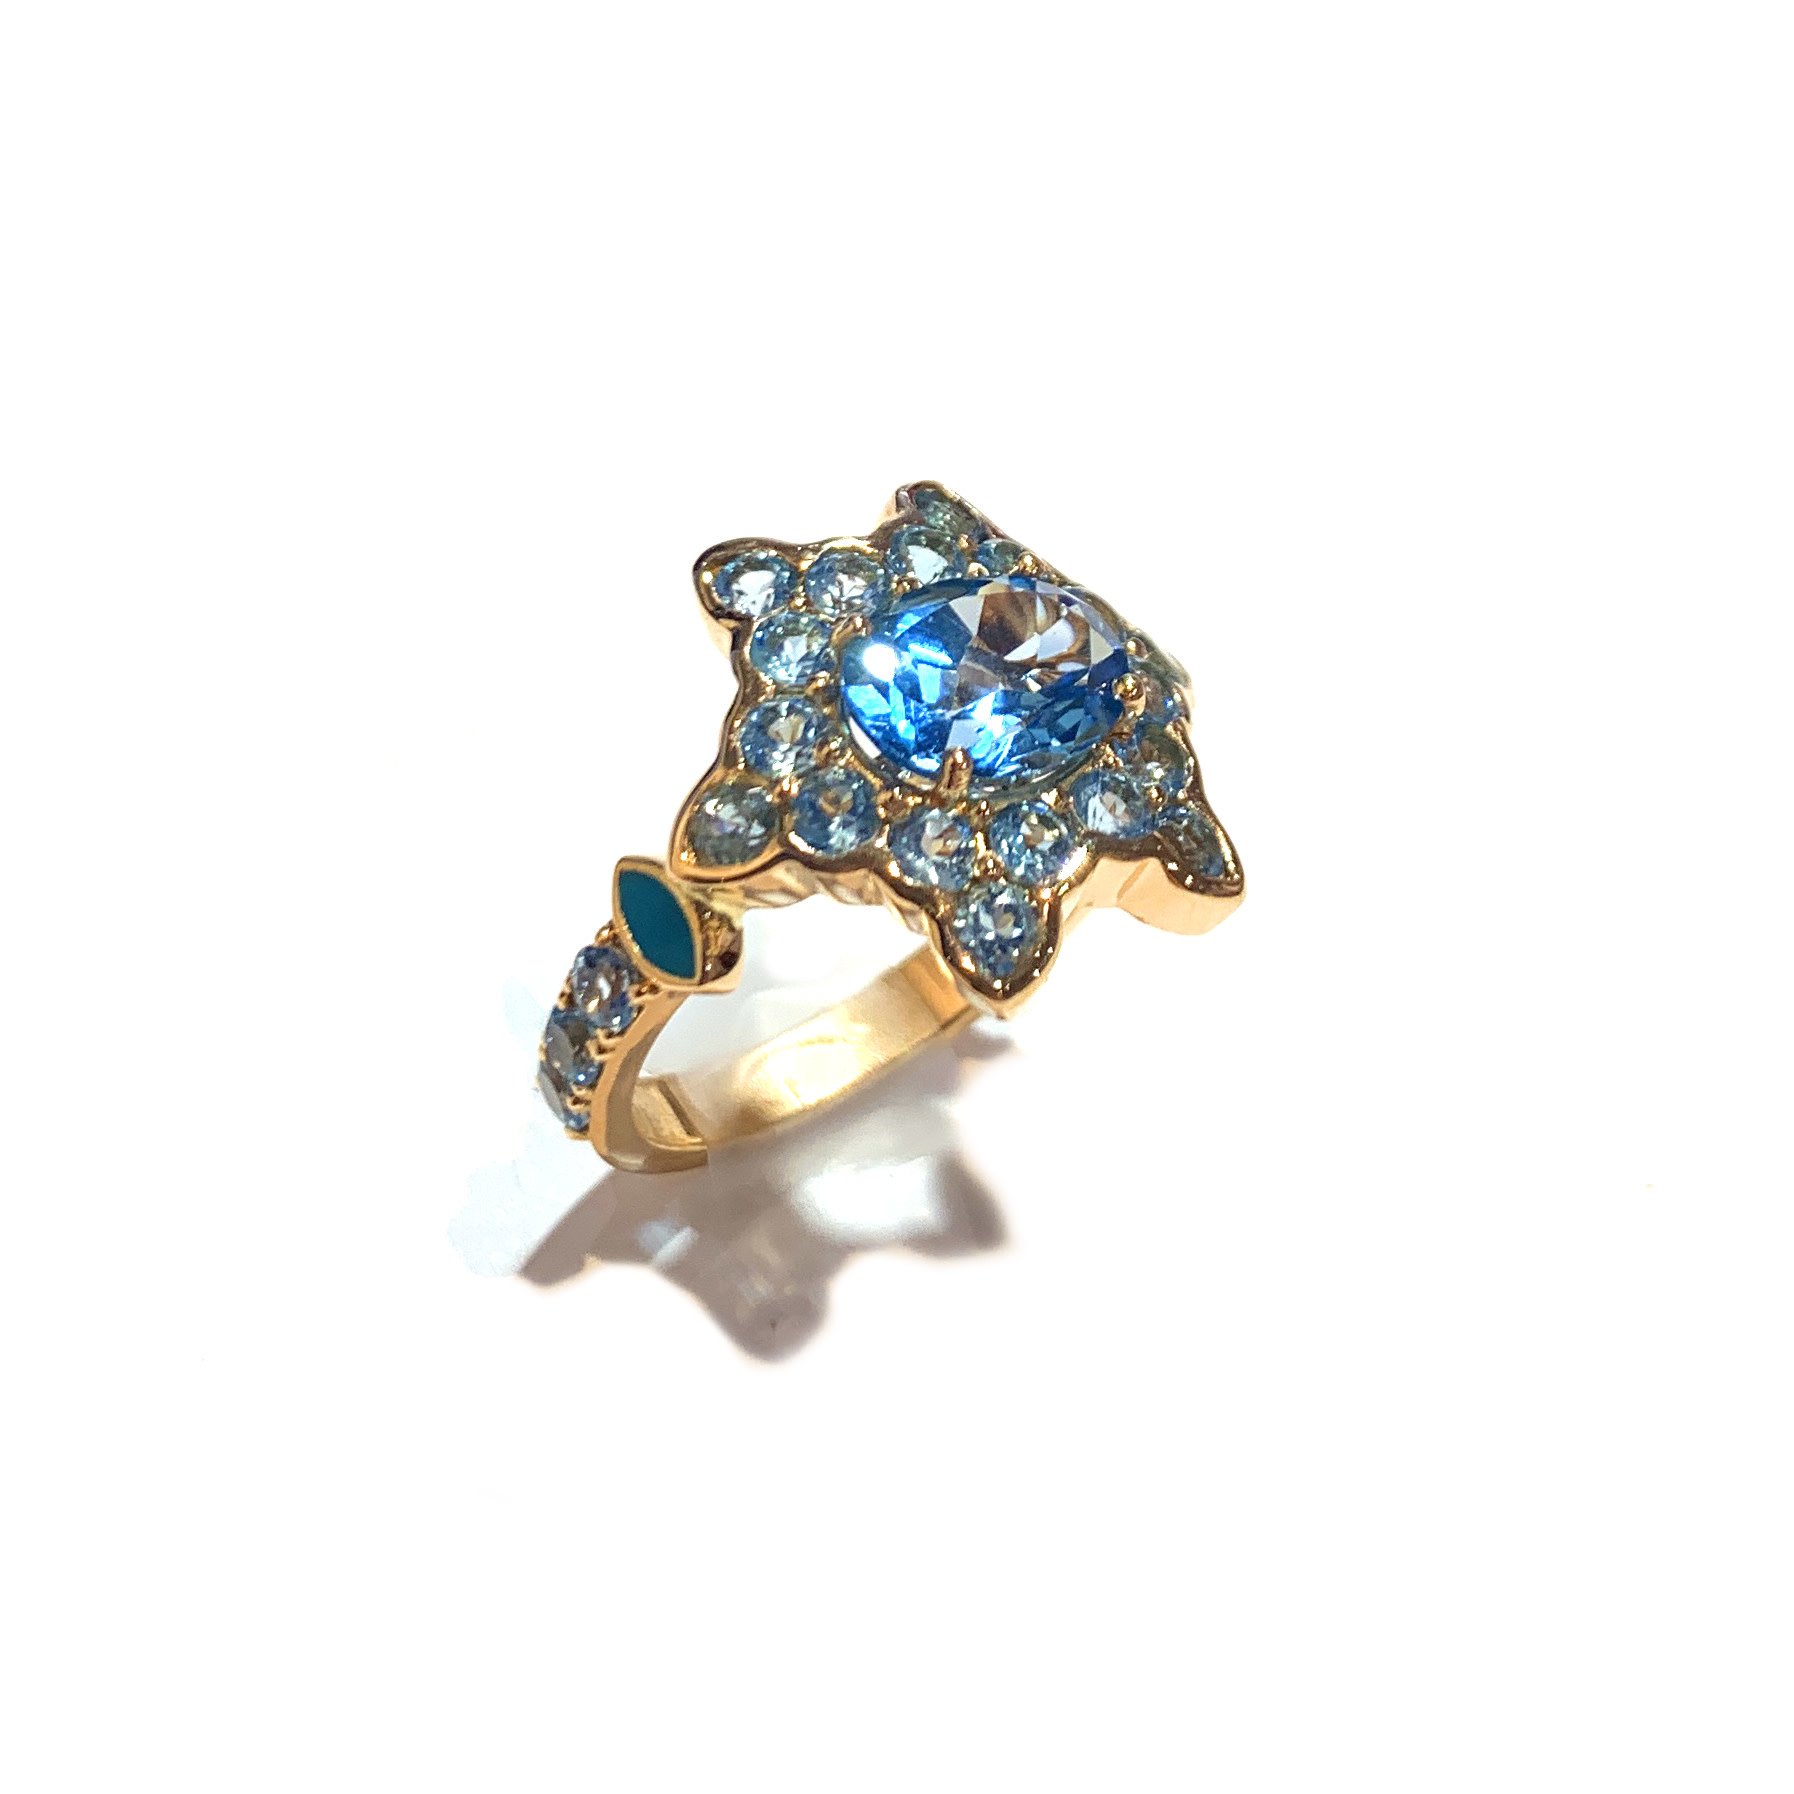 Blue Topaz with turquoise enamel ring